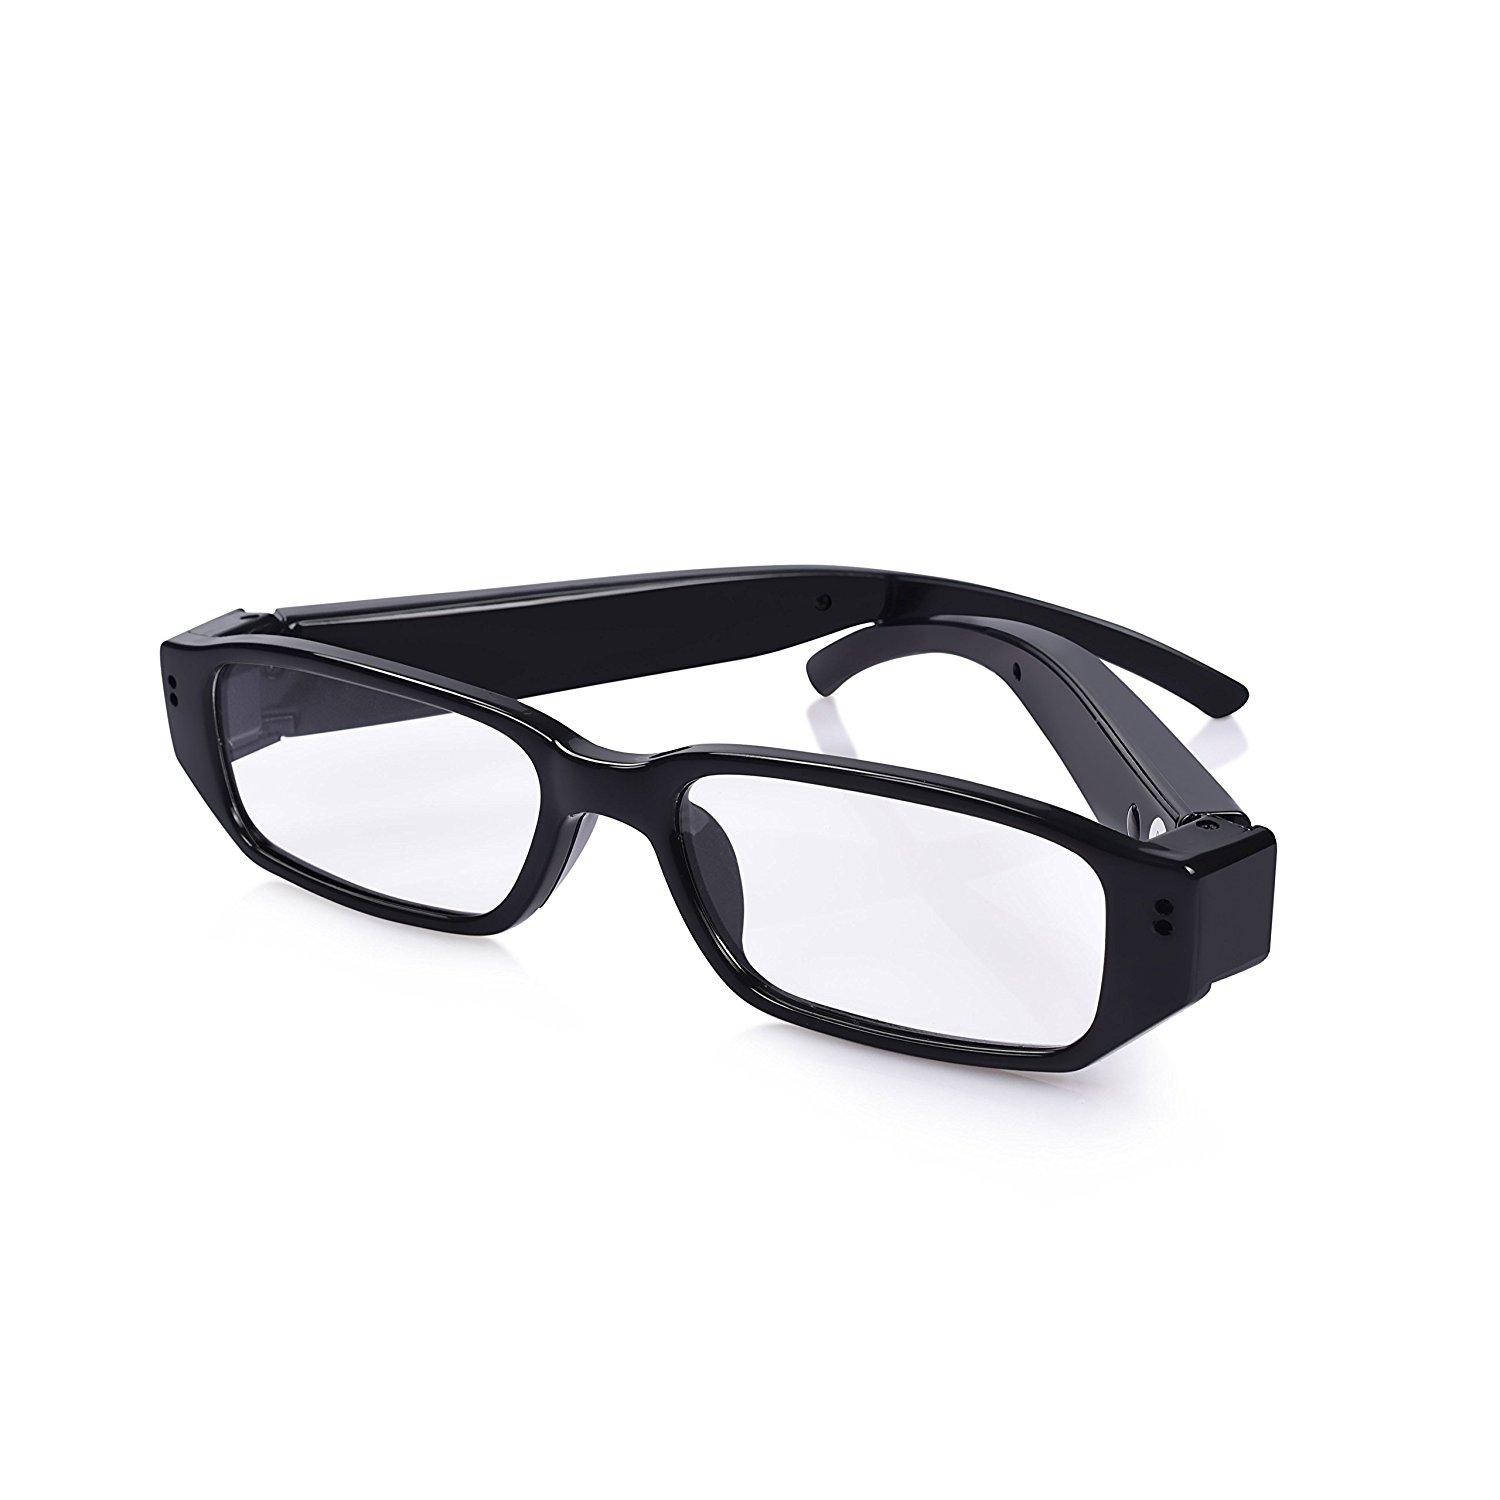 Hd 1280×720p Eyewear Hidden Camera Eyeglasses Spy Camera Glasses ...